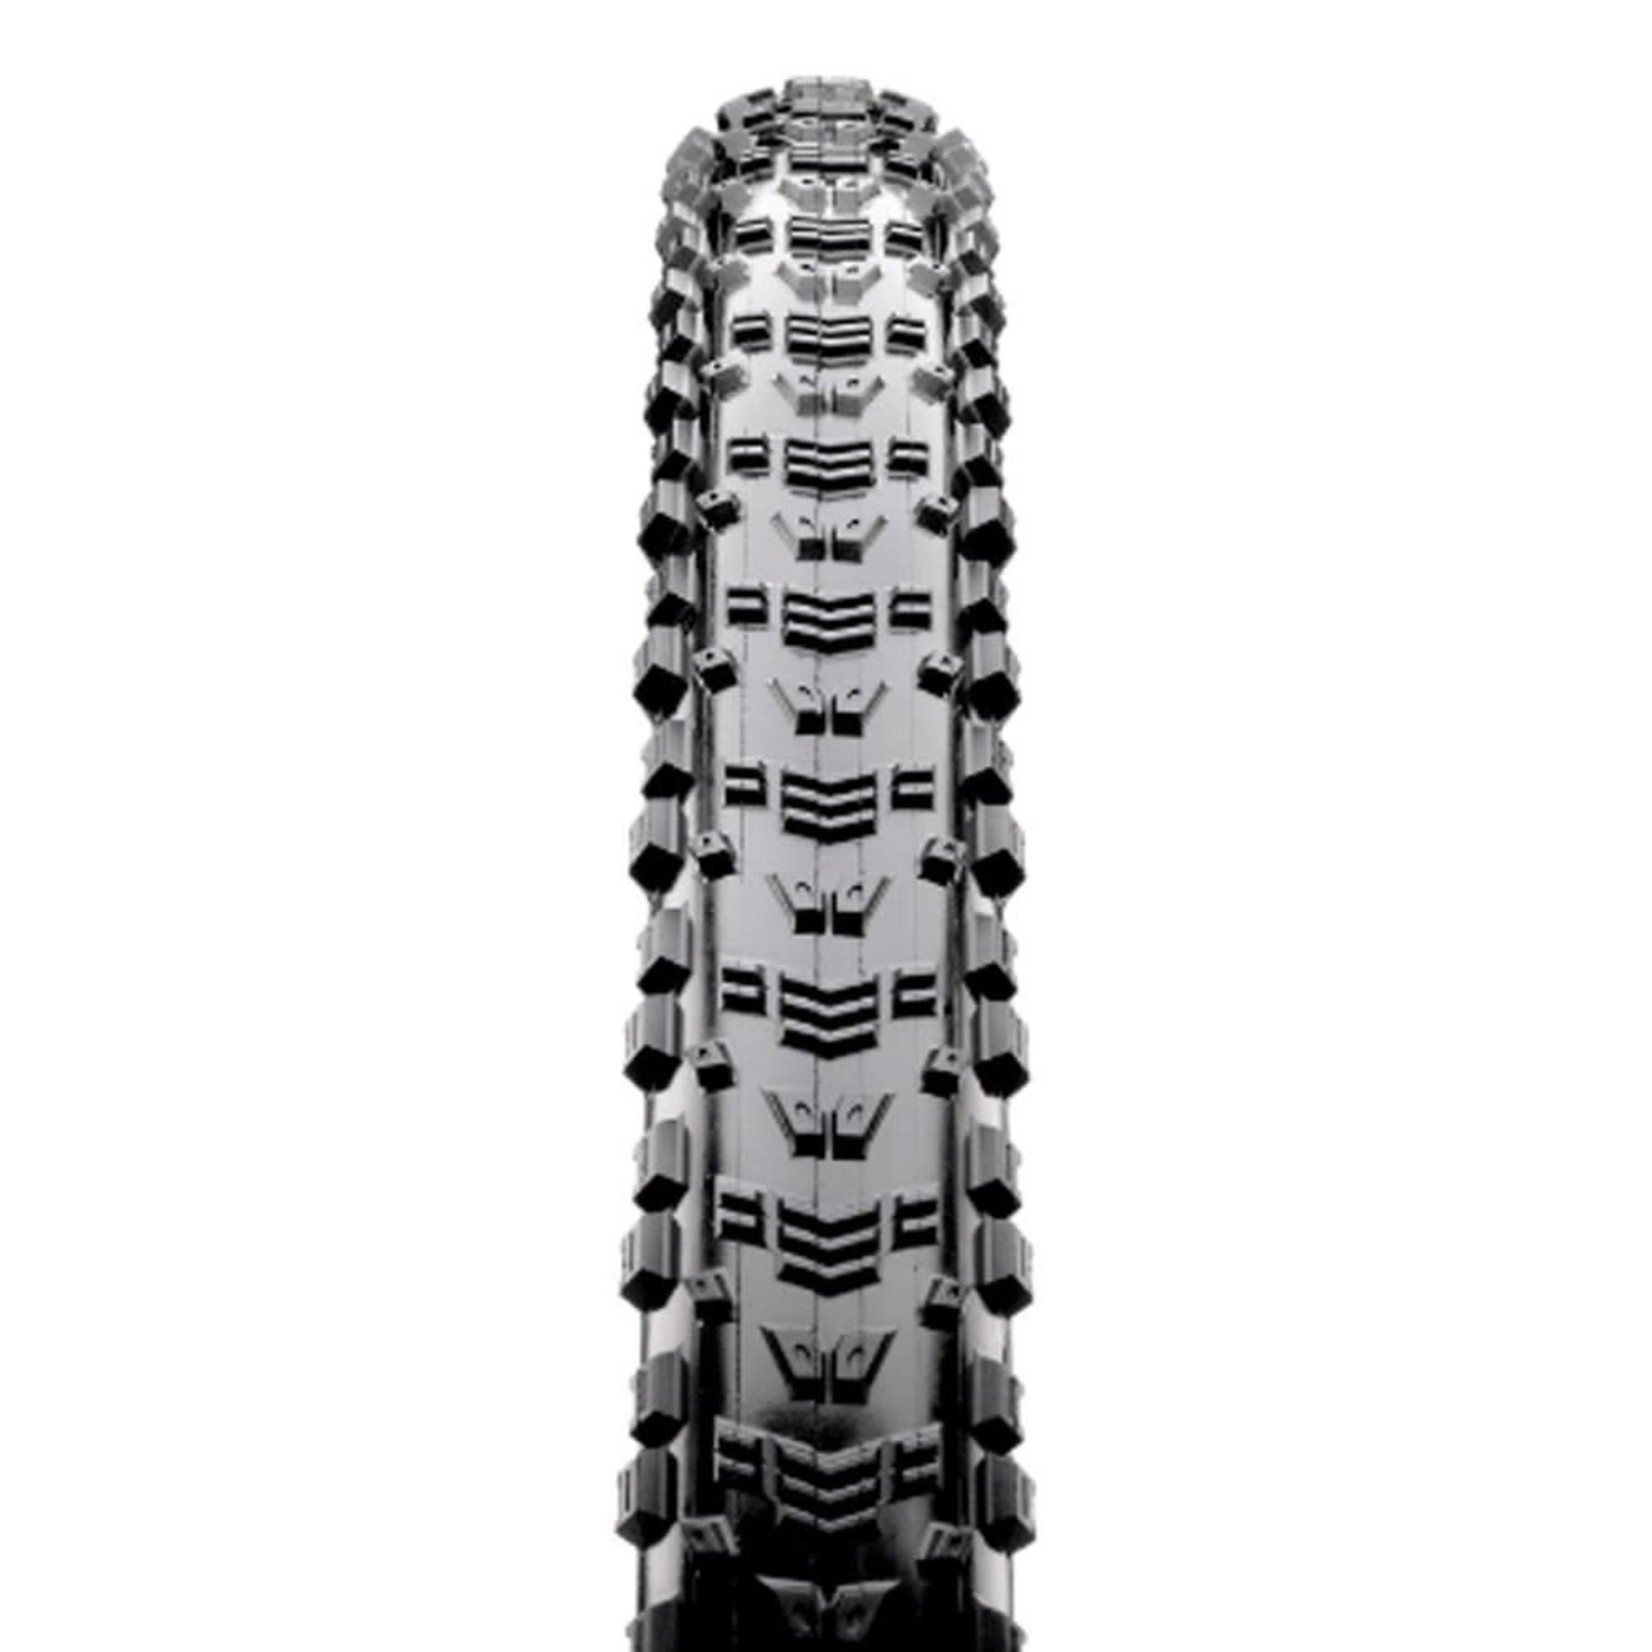 Maxxis Maxxis Aspen XC Race Dual Bike Tyre - 29 X 2.25 - EXO TR Folding - 120TPI - Pair